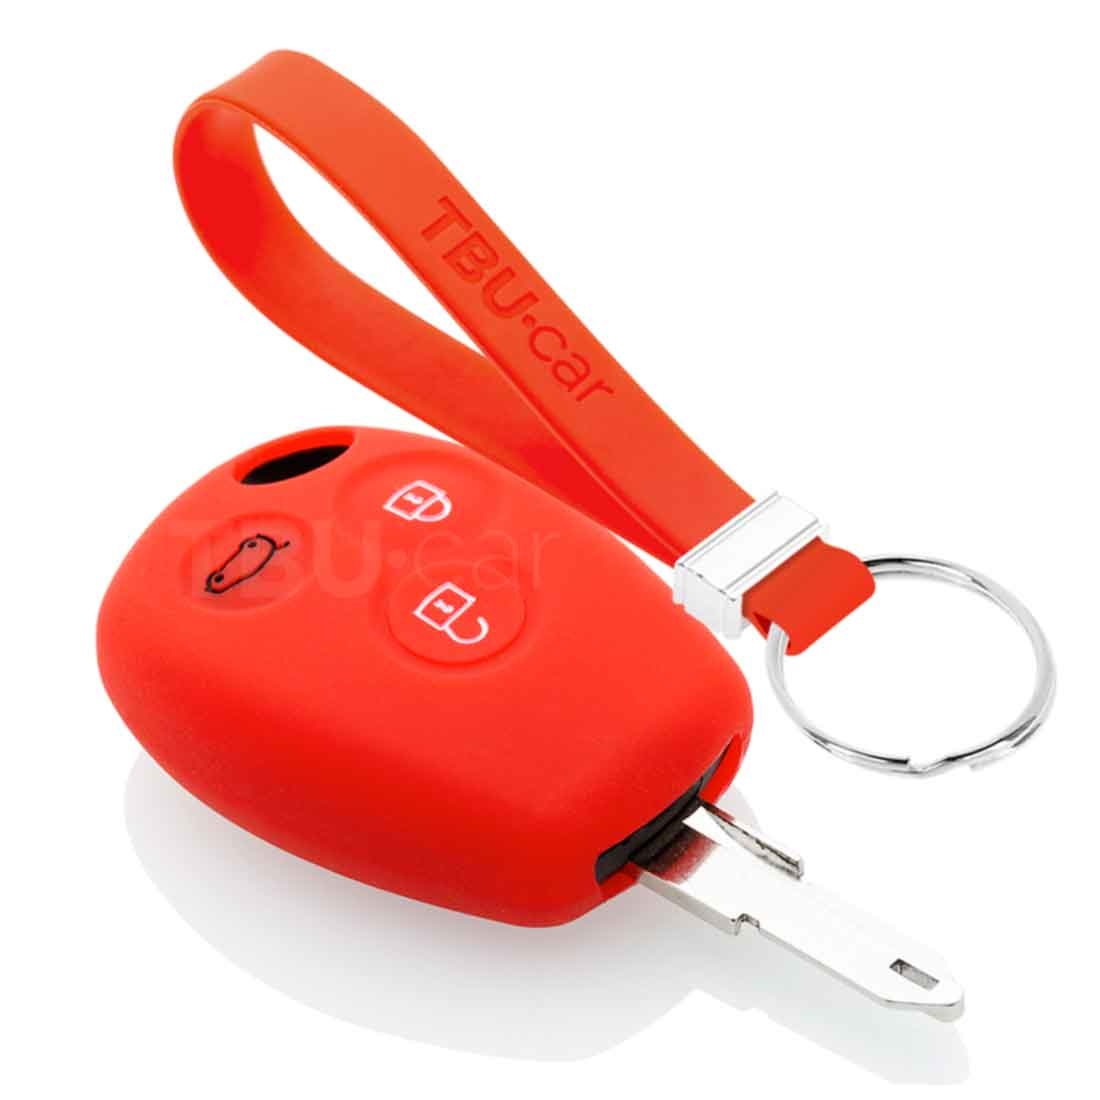 TBU car TBU car Autoschlüssel Hülle kompatibel mit Smart 3 Tasten - Schutzhülle aus Silikon - Auto Schlüsselhülle Cover in Rott